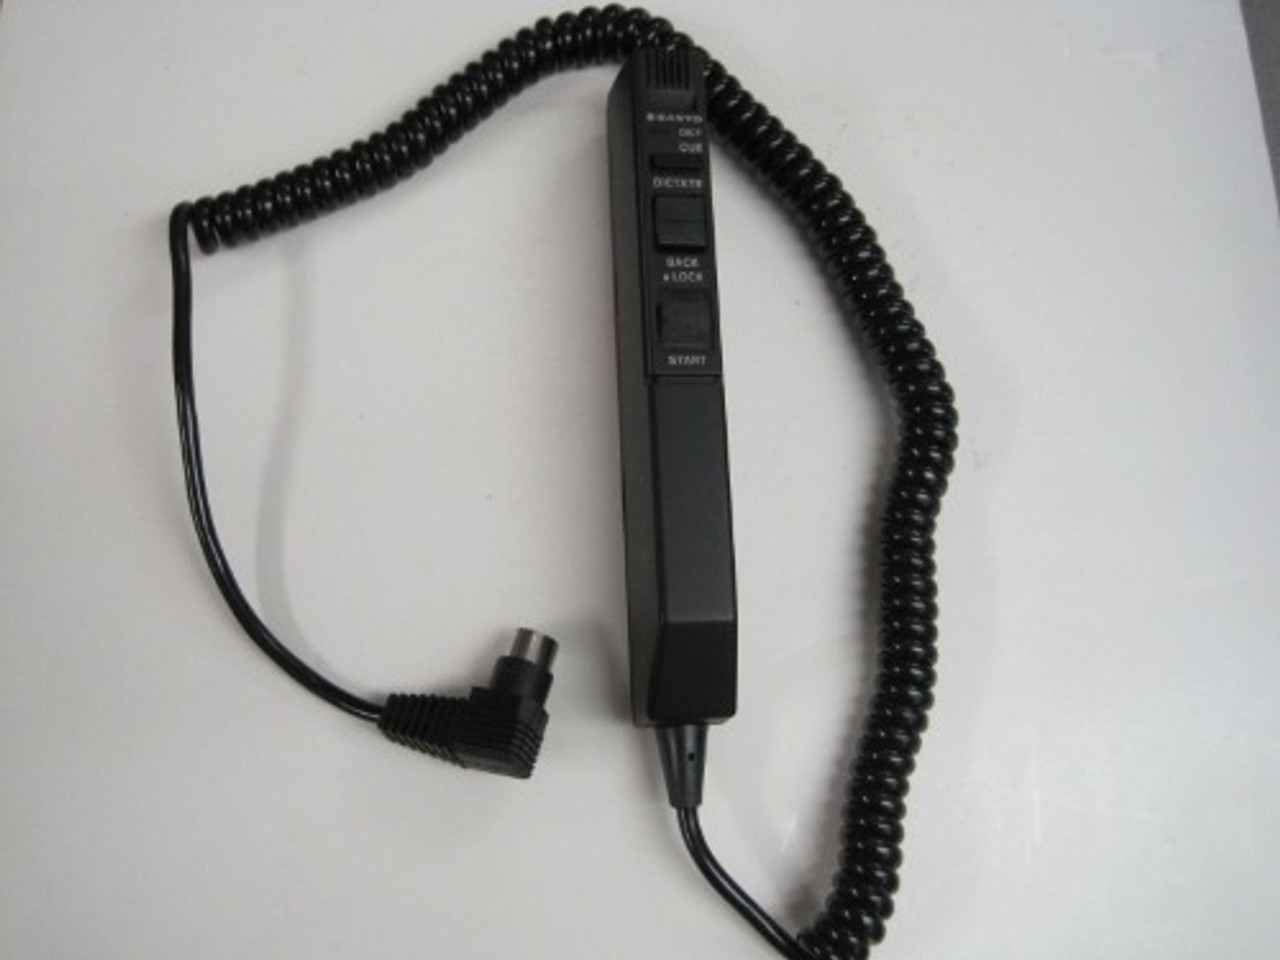 Sanyo Trc 7600 Minicassette Transcription Dictation Machine microphone